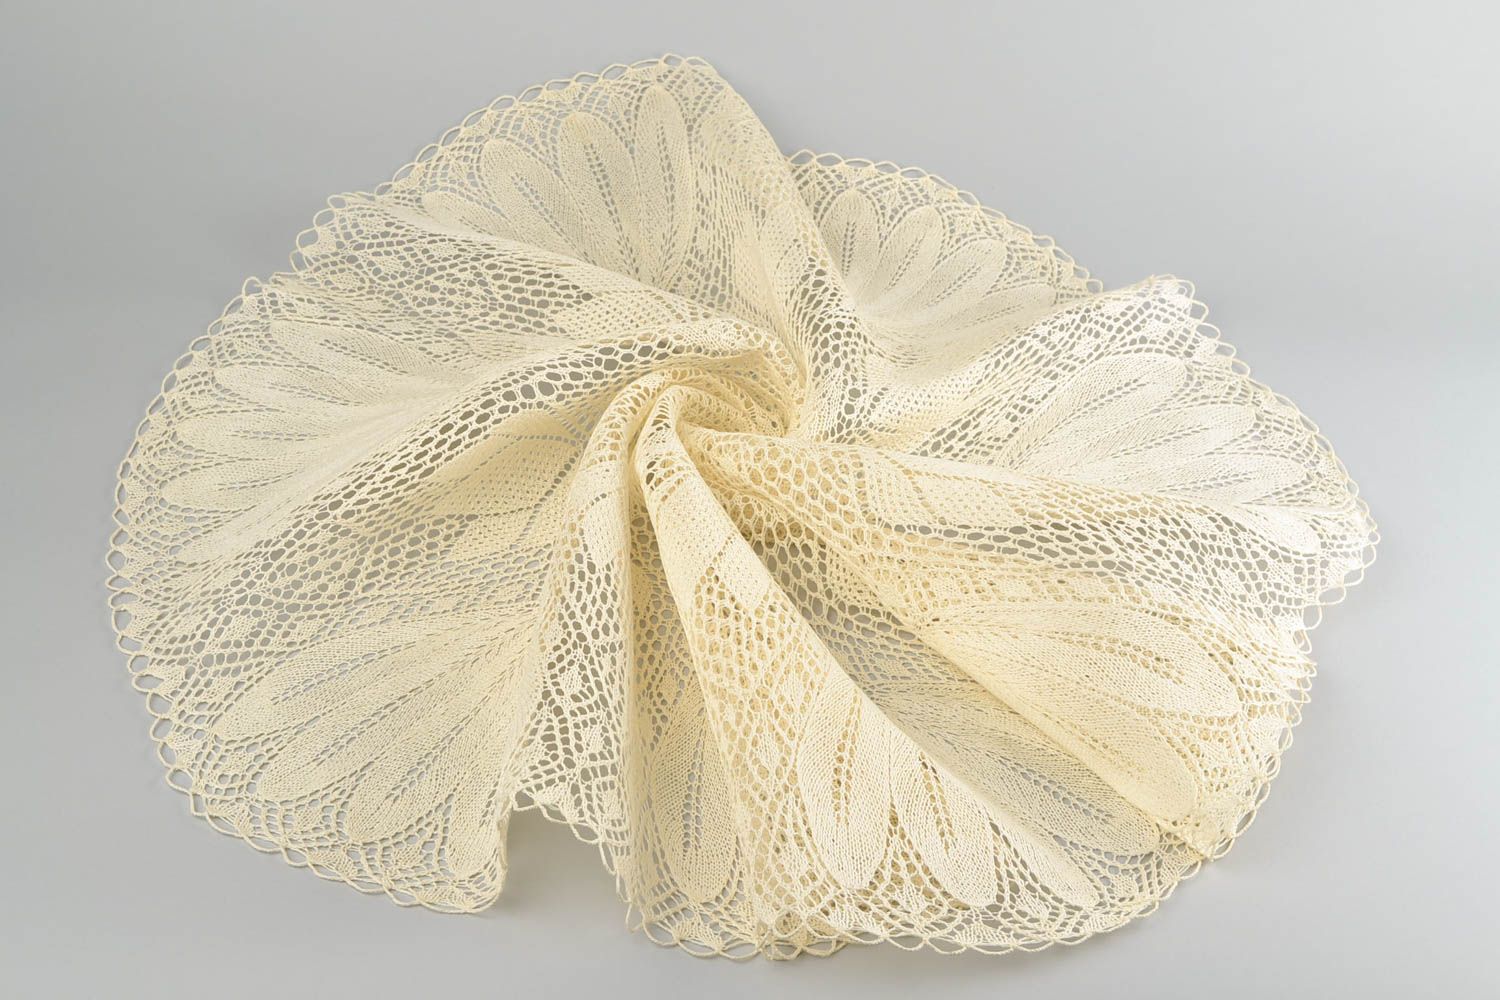 Openwork crochet tablecloth handmade lace napkin vintage style home ideas photo 4